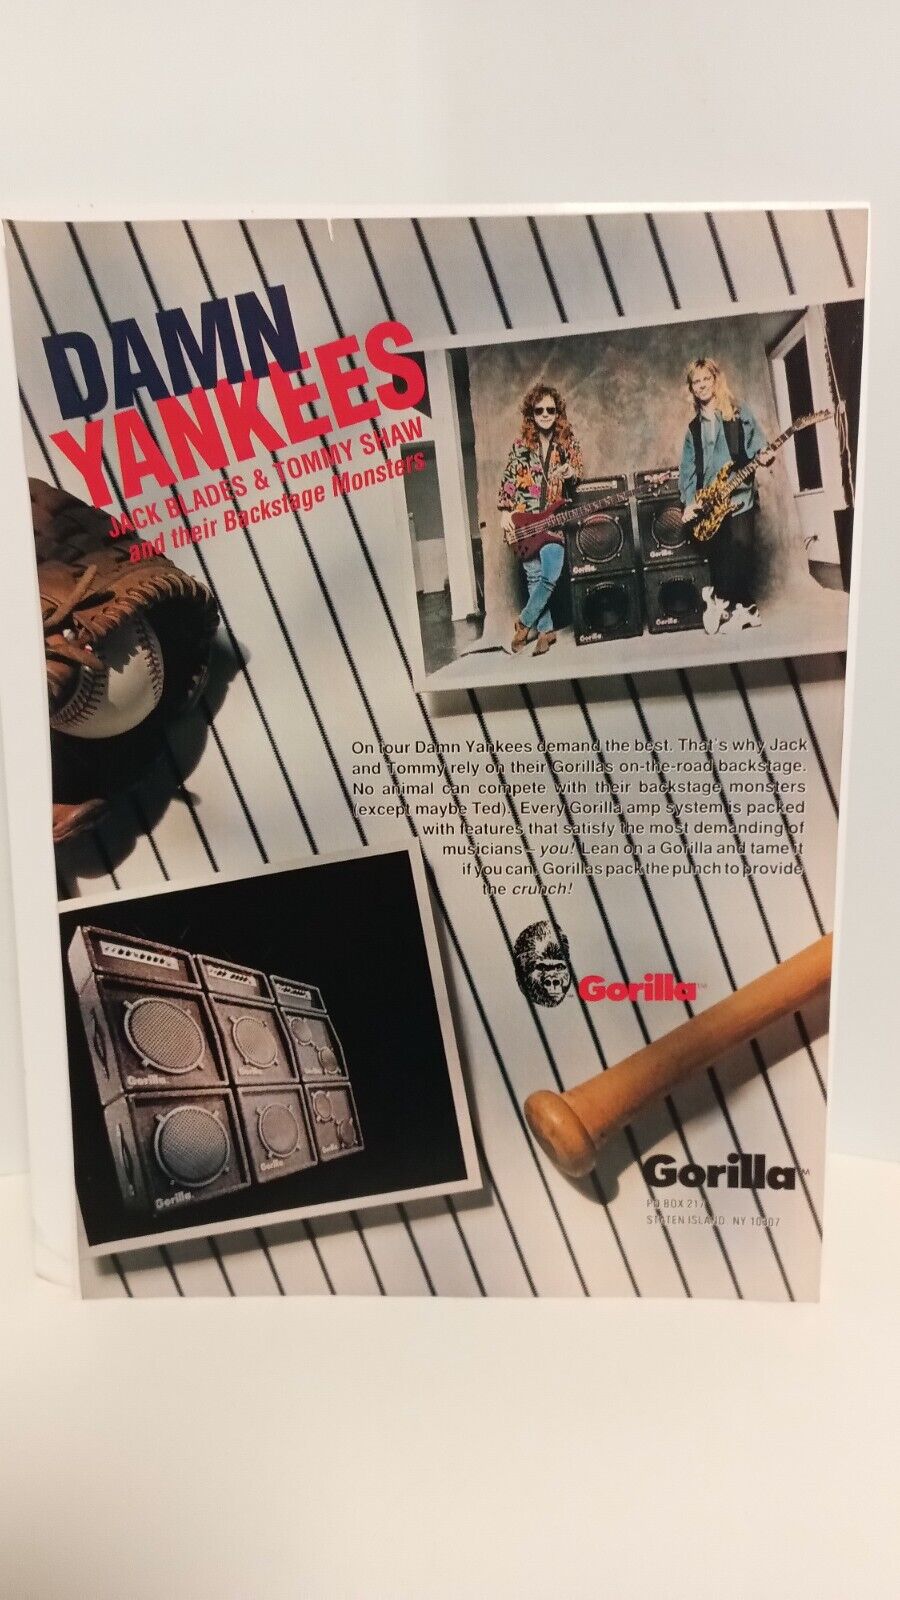 DAMN YANKEES - GORILLA  GUITAR AMPLIFIERS - 11X8.5 - PRINT AD. x3